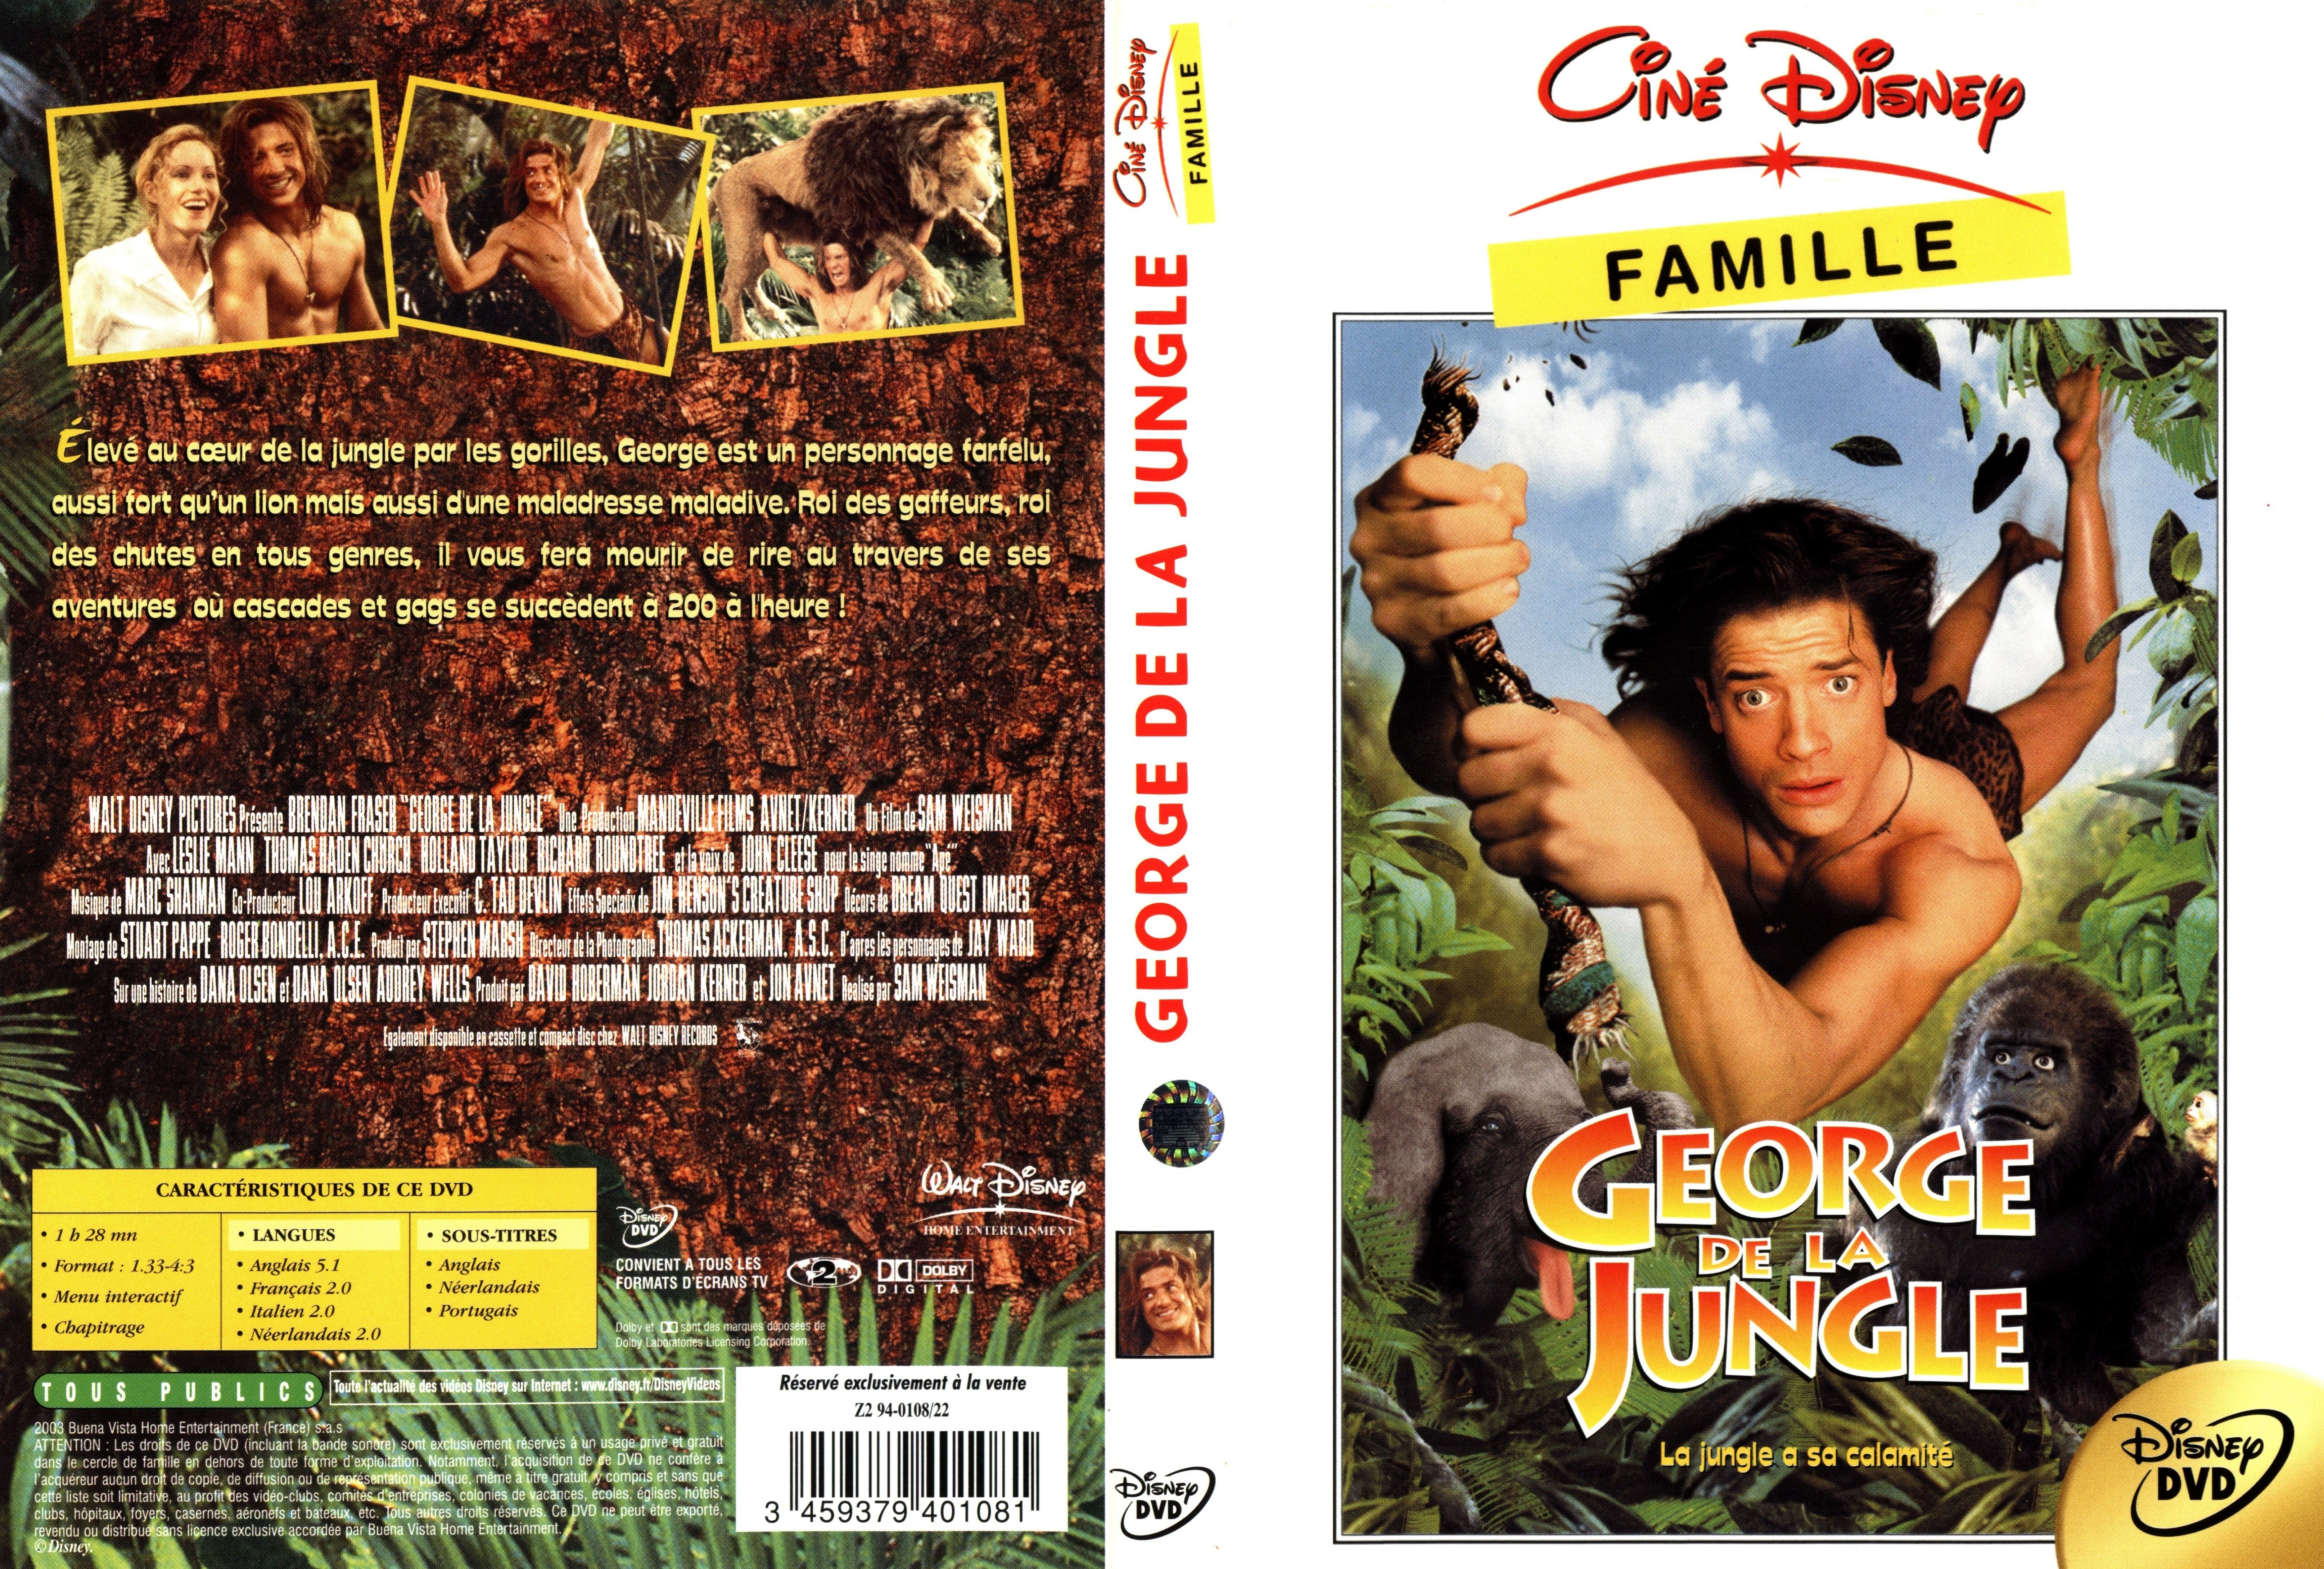 Jaquette DVD George de la jungle v2